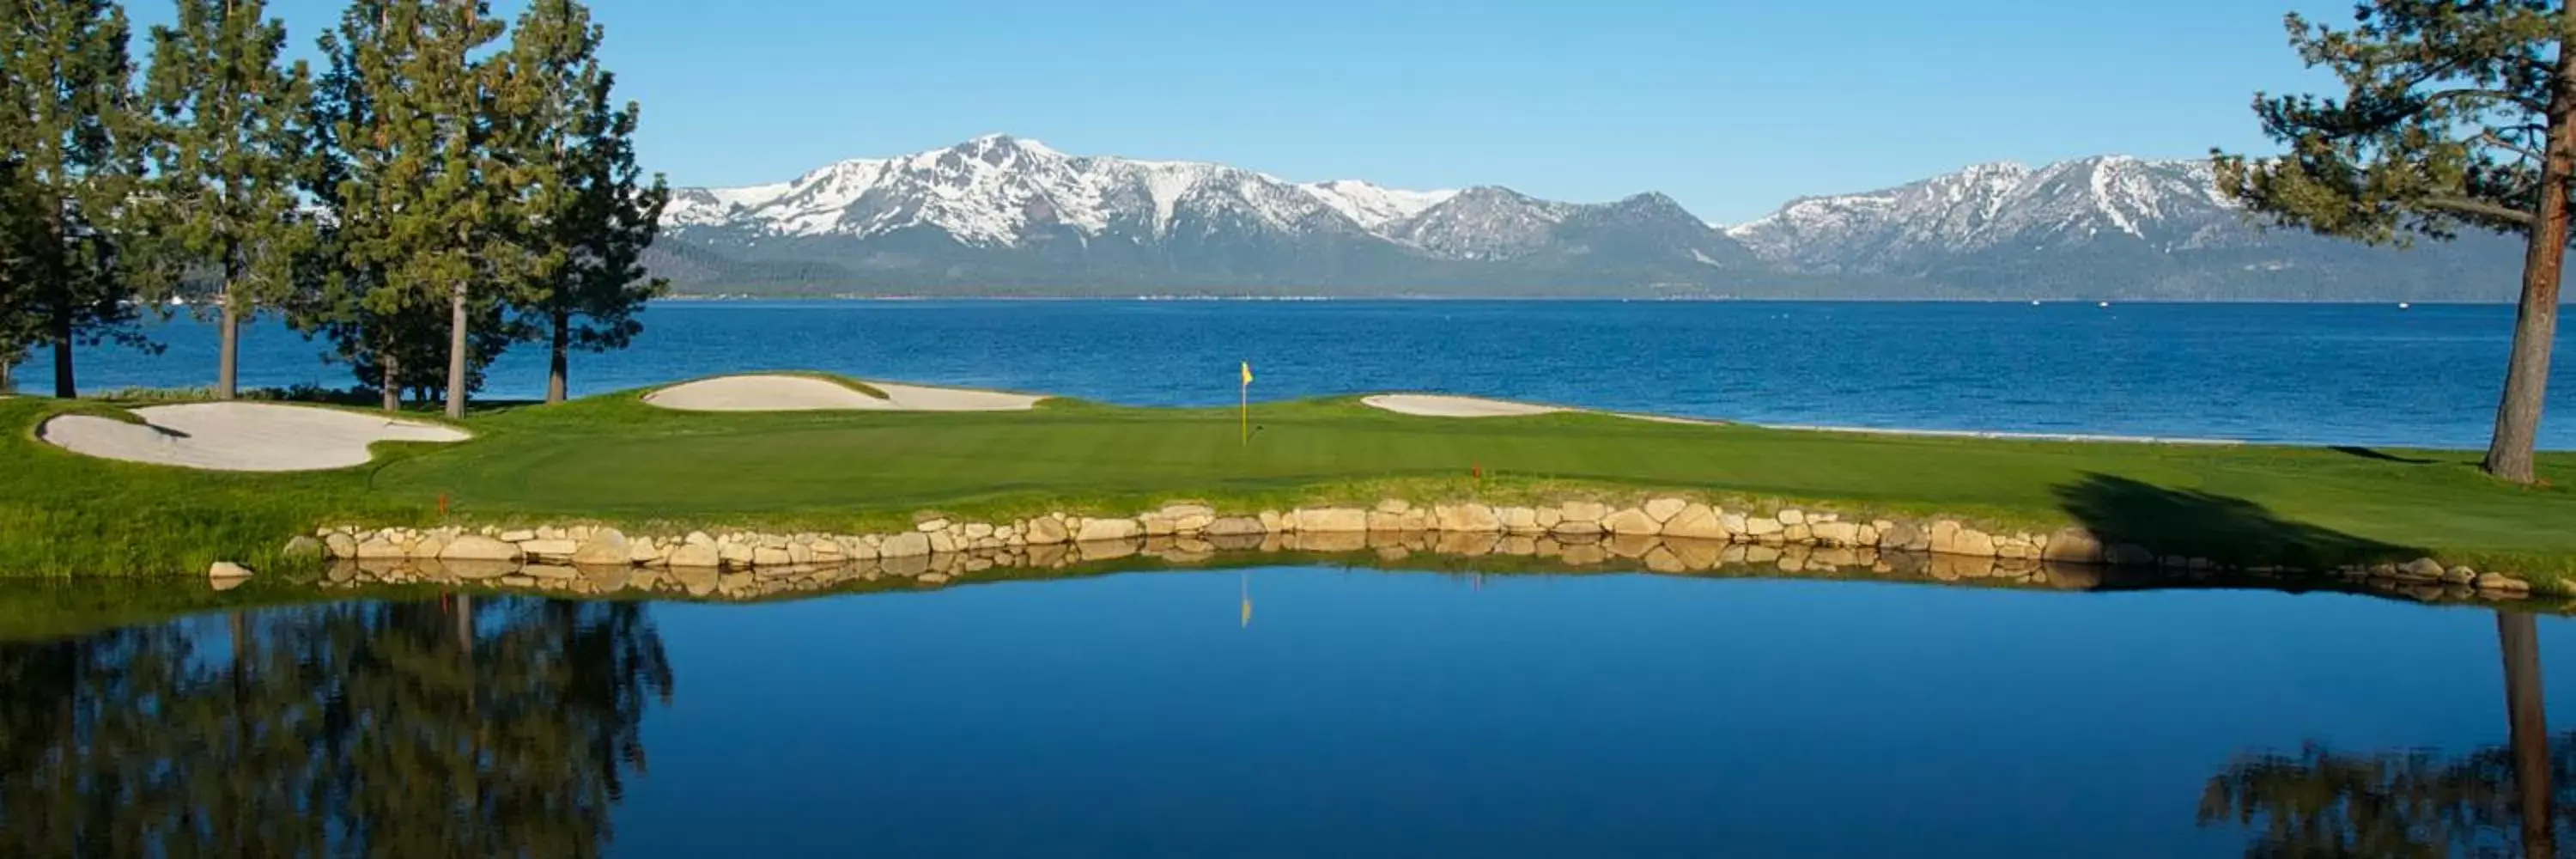 Summer, Golf in Edgewood Tahoe Resort